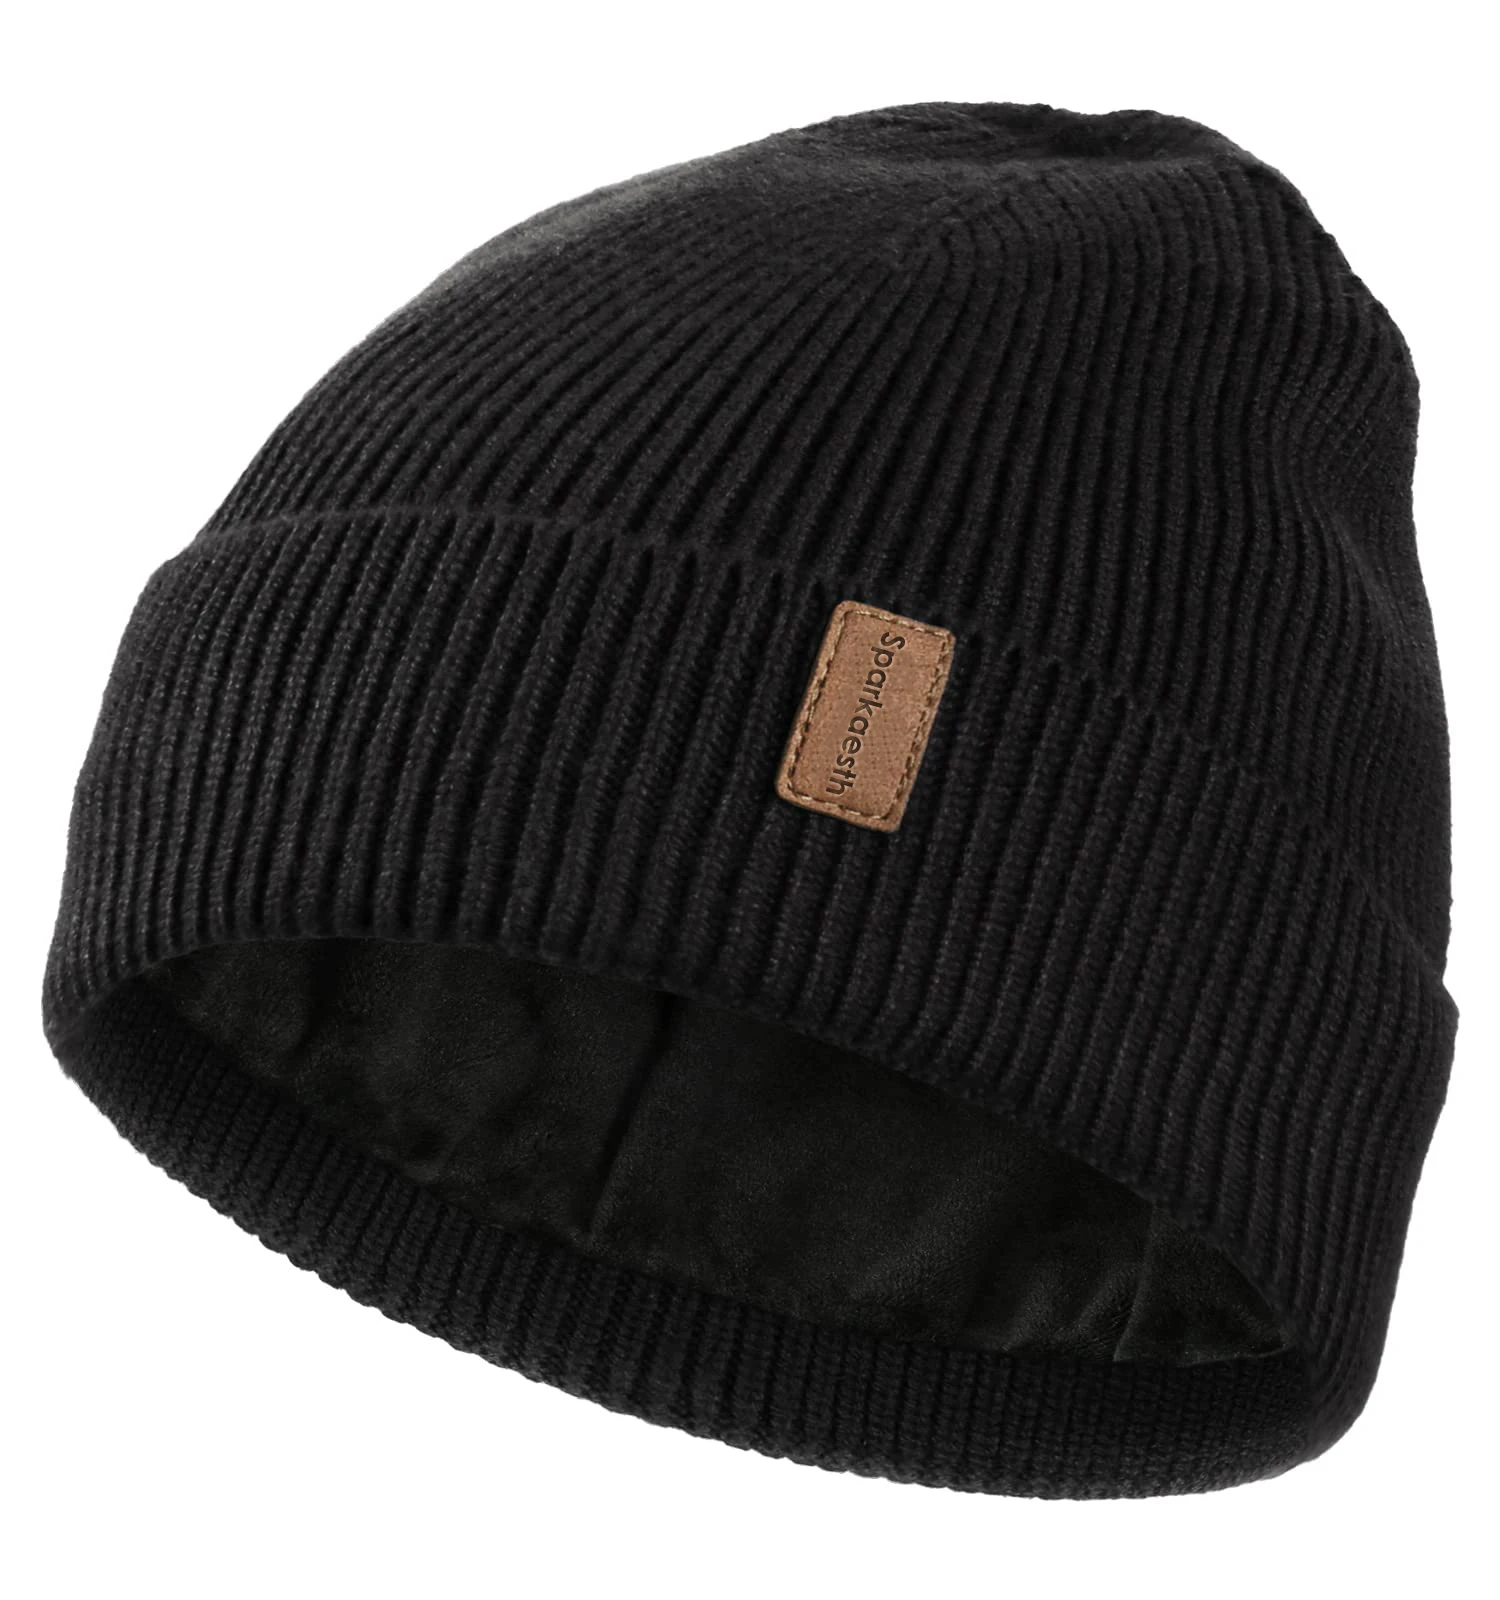 

Sparkaesth Winter Beanie Hats for Men Women, Fleece Lined Beanie Soft Warm Knit Hat Ski Stocking Cuffed Cap